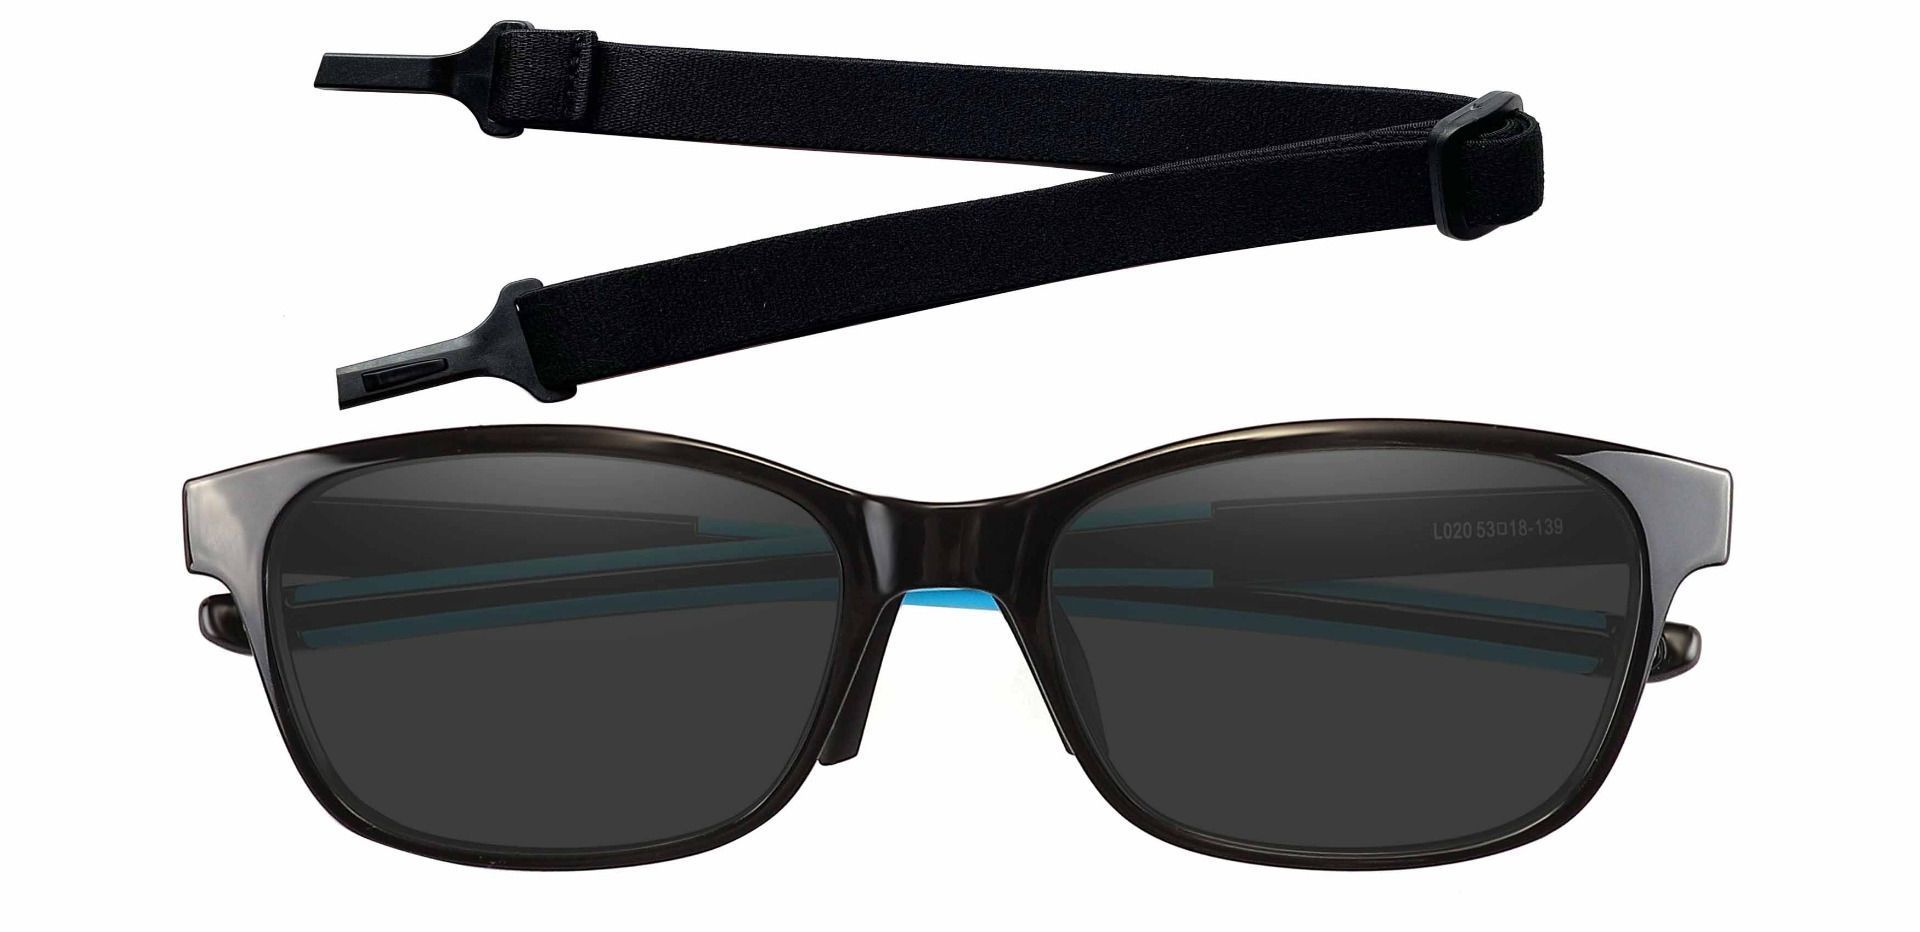 Higgins Rectangle Lined Bifocal Sunglasses - Black Frame With Gray Lenses